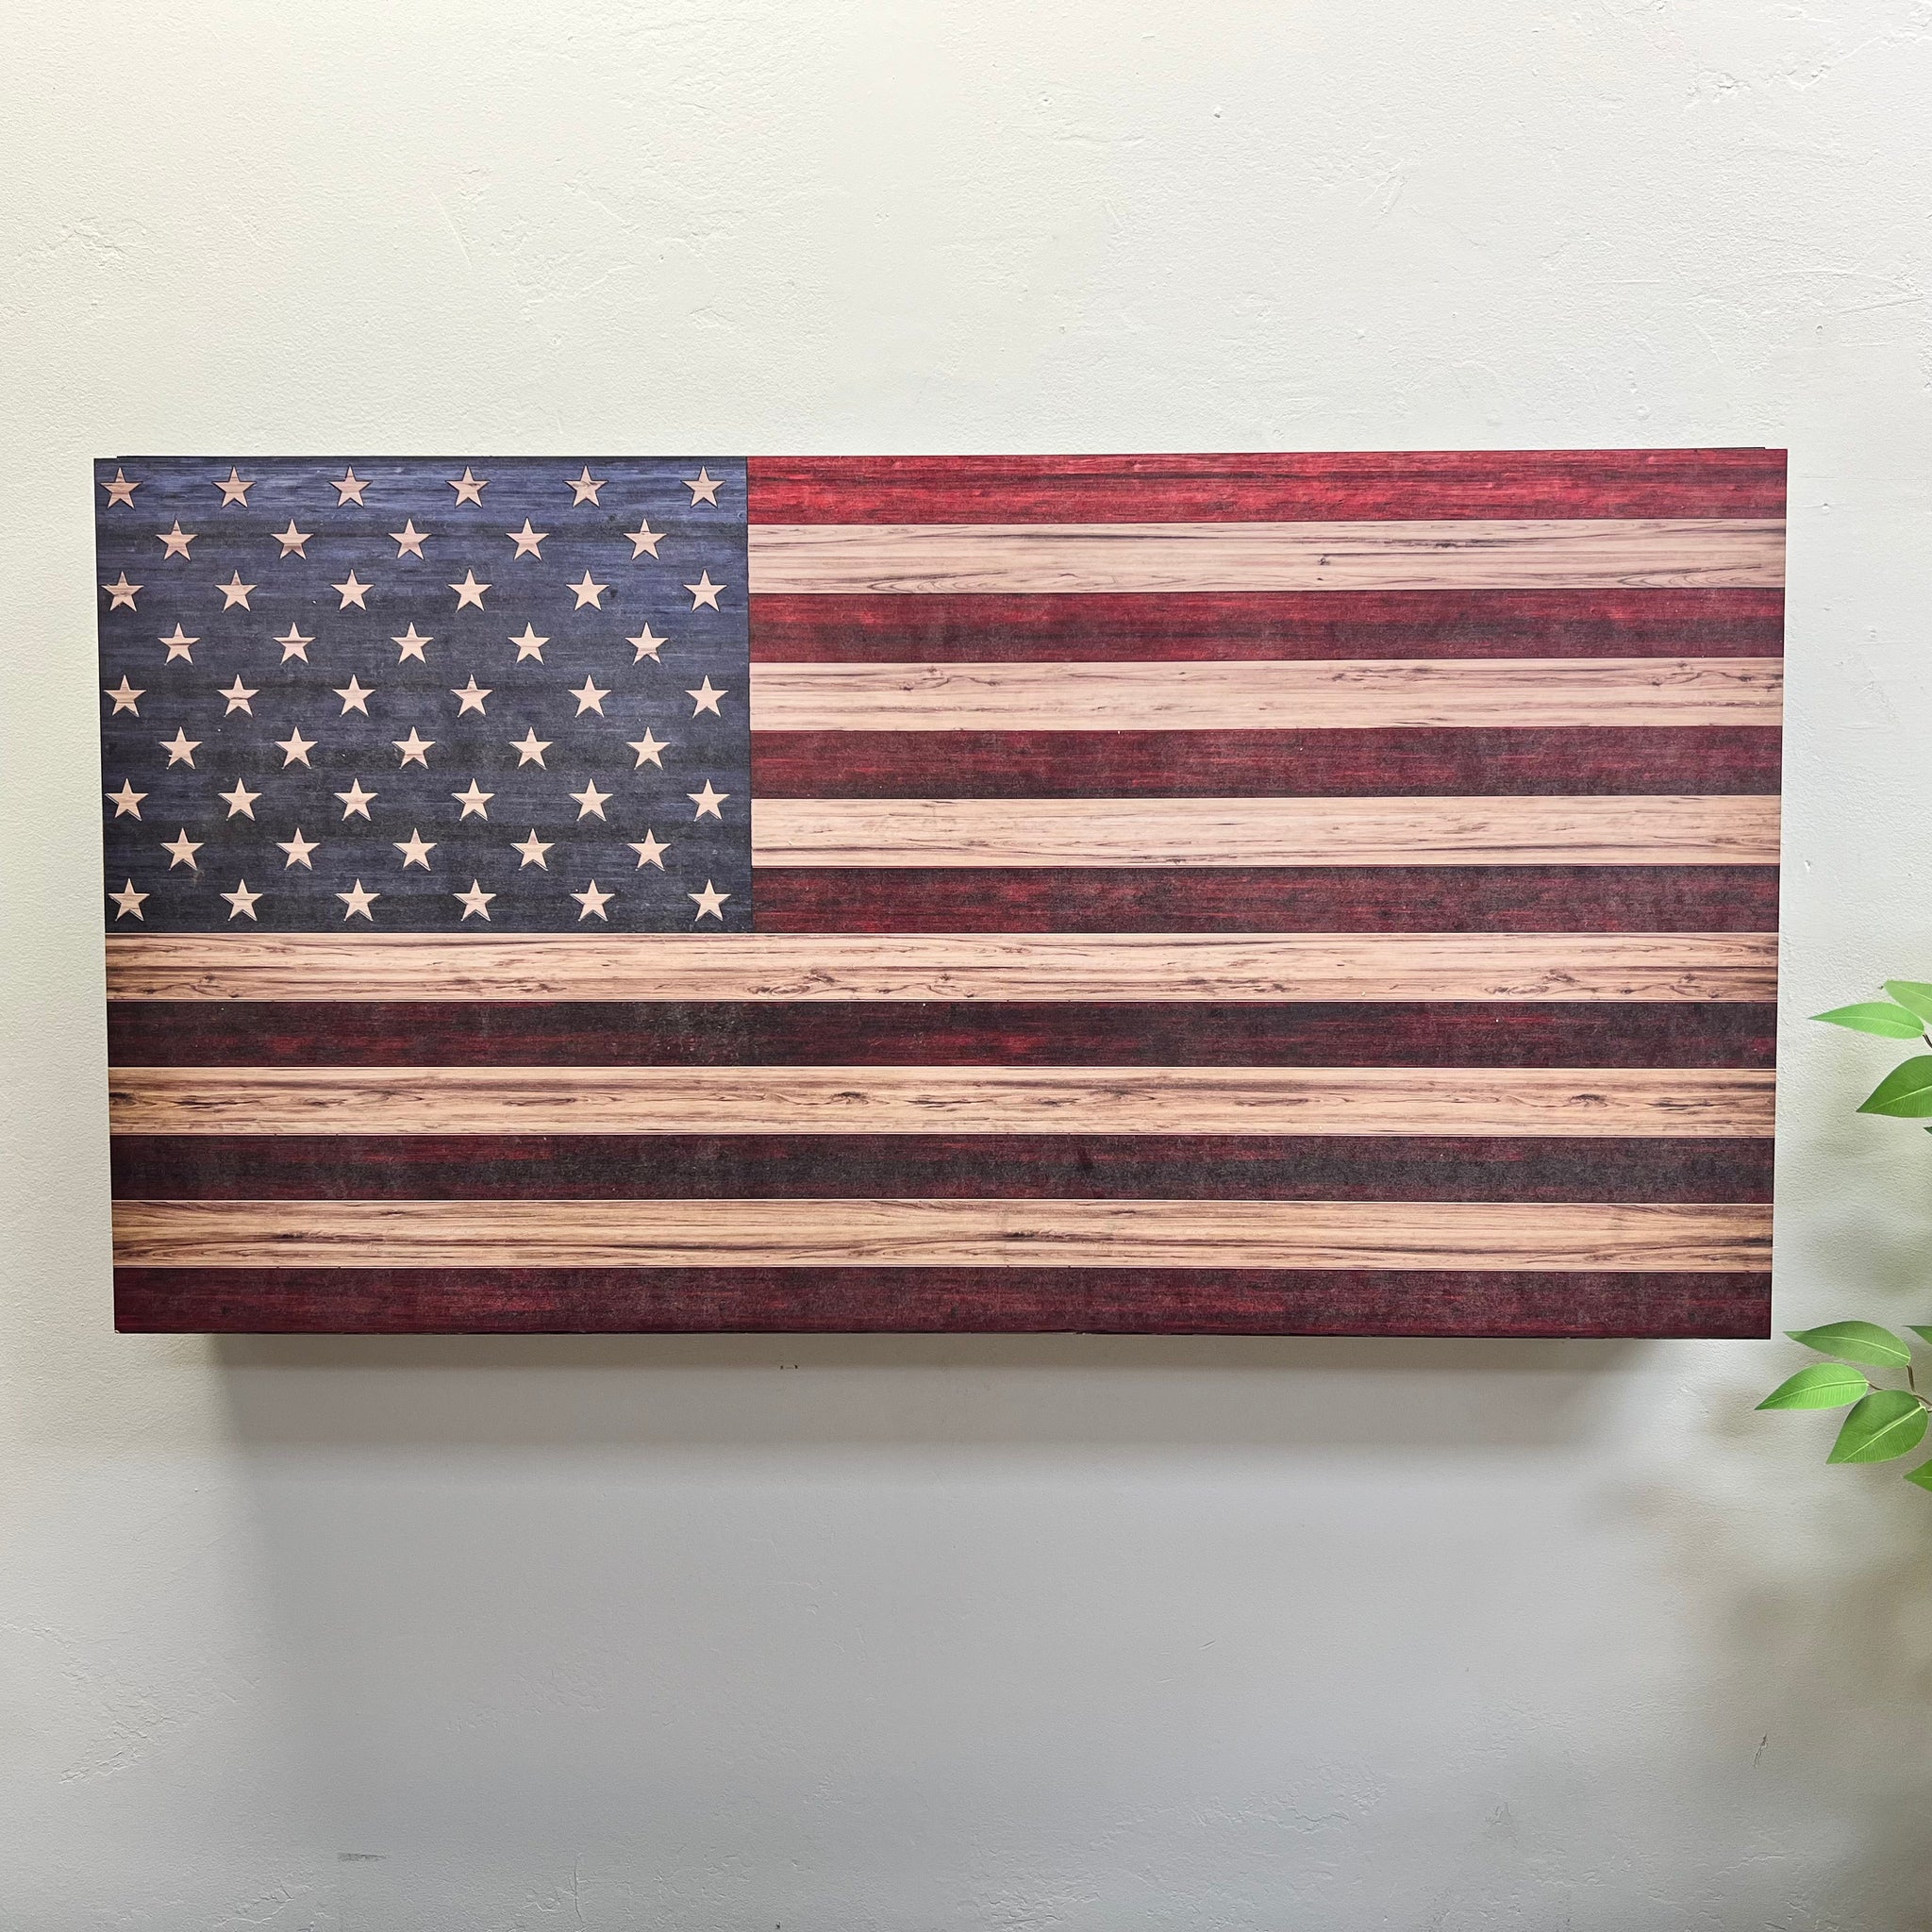 UV Printed Wood Red, Wood and Blue Flag